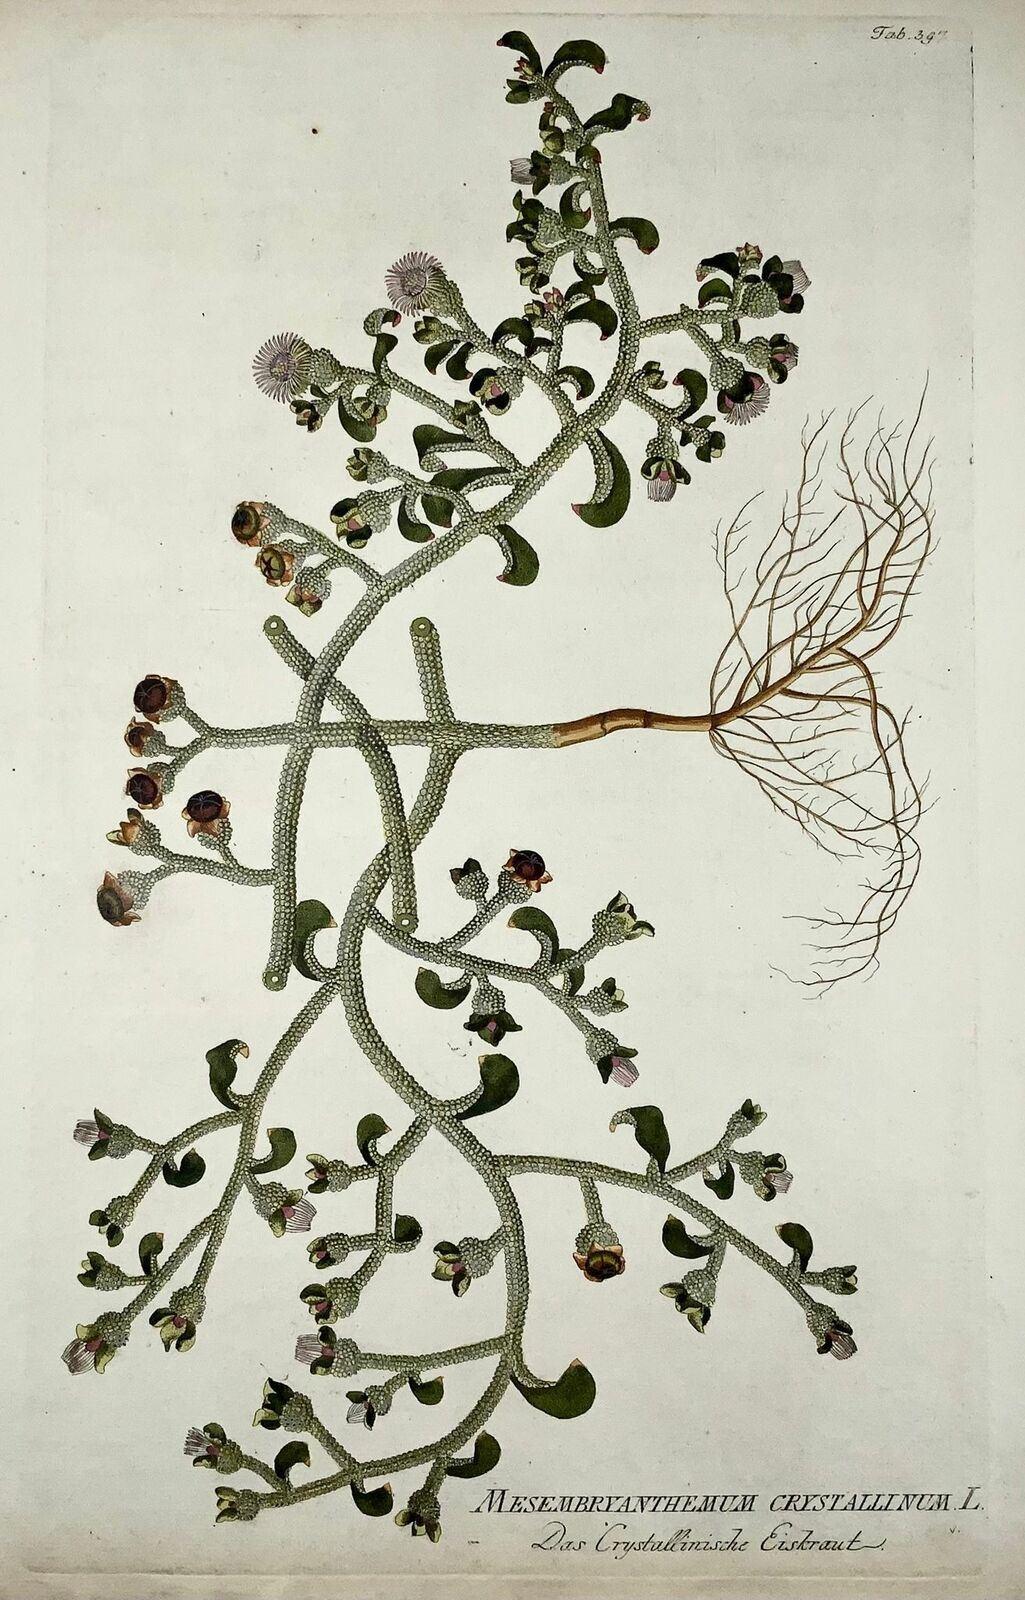 J. J. Plenck

Icones plantarum medicinalium, Wien 1788 ff.

Sheet Size 45 x 29 cm.

References Nissen, BBI 1536, Great Flower Books 70 u. de Belder 281

Joseph Jacob Plenck ( Plencke in some works) (1735-1807) was an Austrian physician and